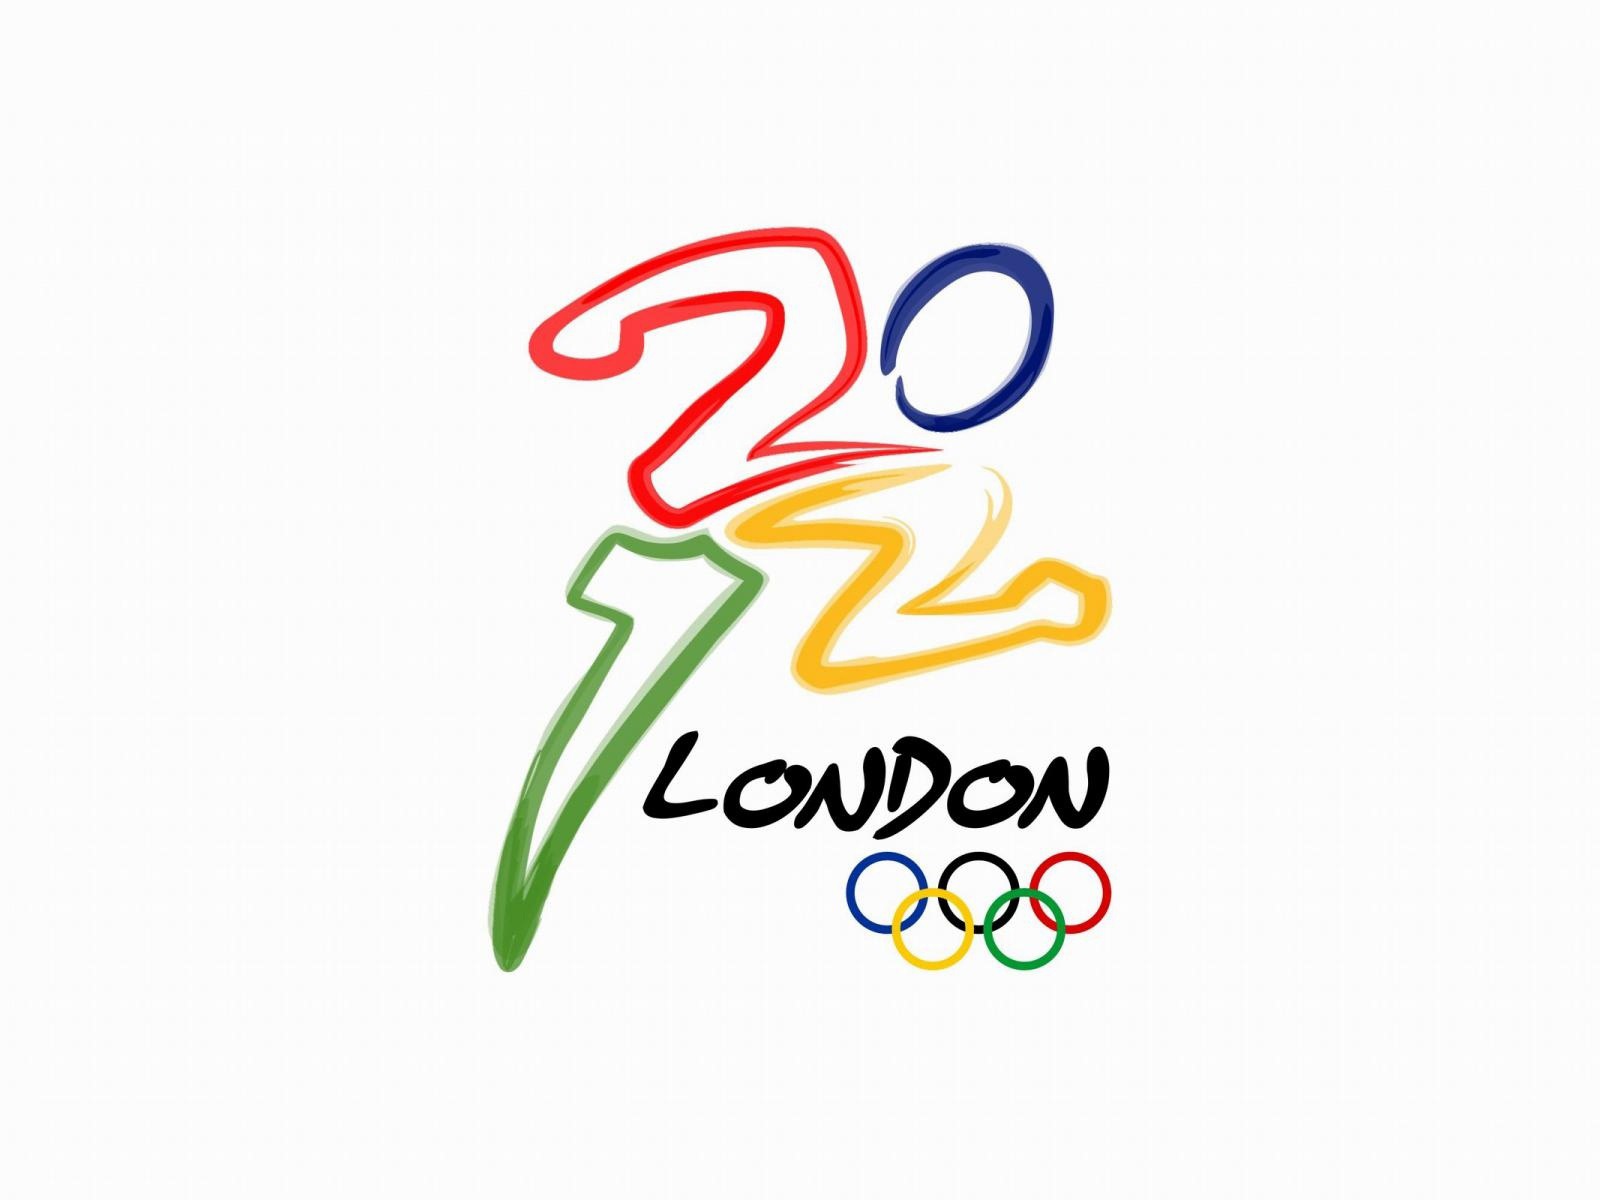 London 2012 Olympics theme wallpapers (2) #22 - 1600x1200